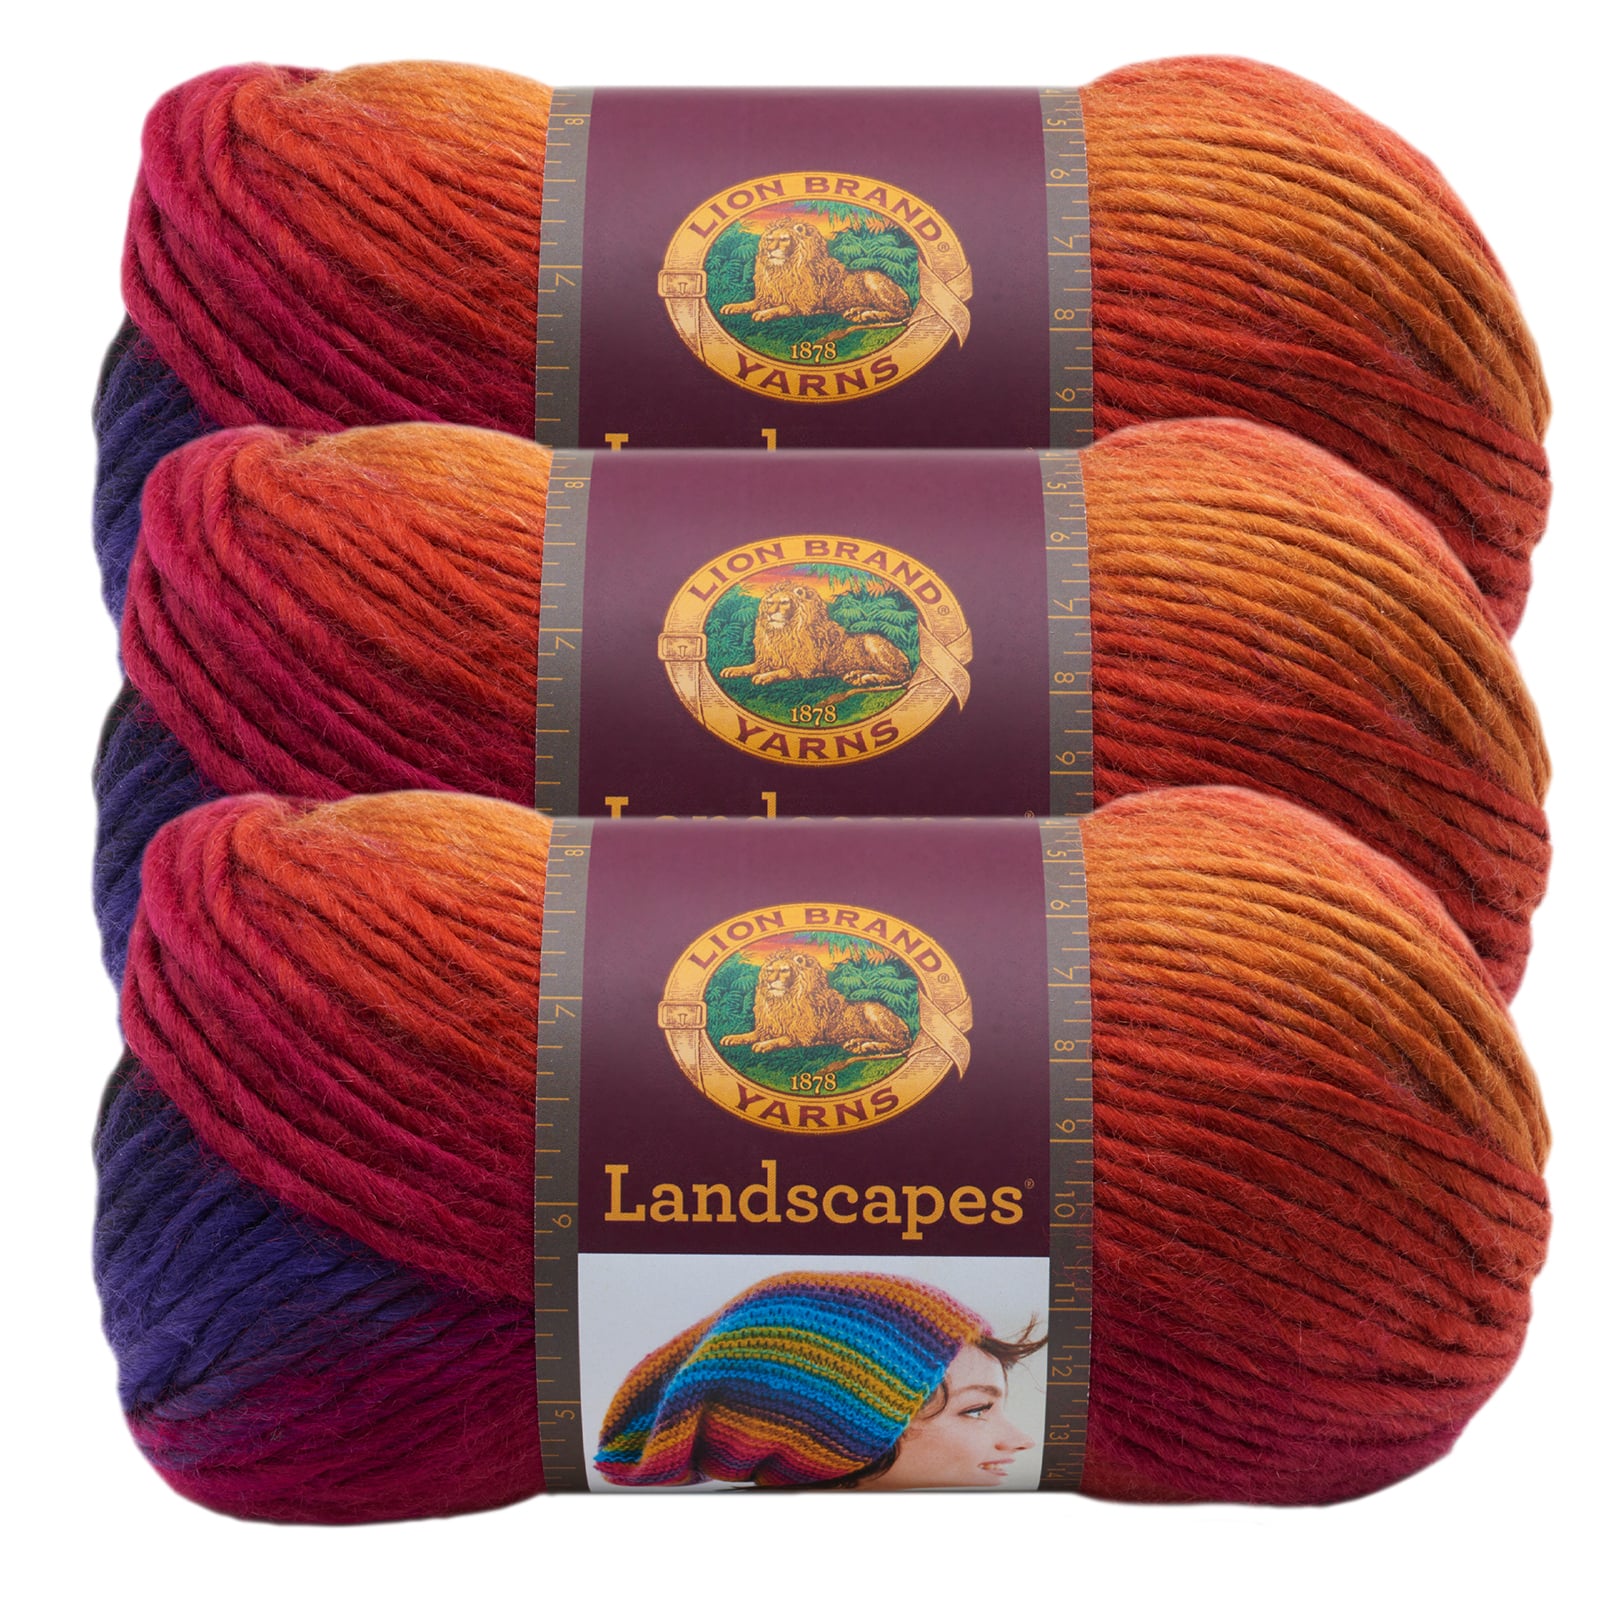 Lion Brand Yarn Landscapes, Self Striping Bright Roving Yarn